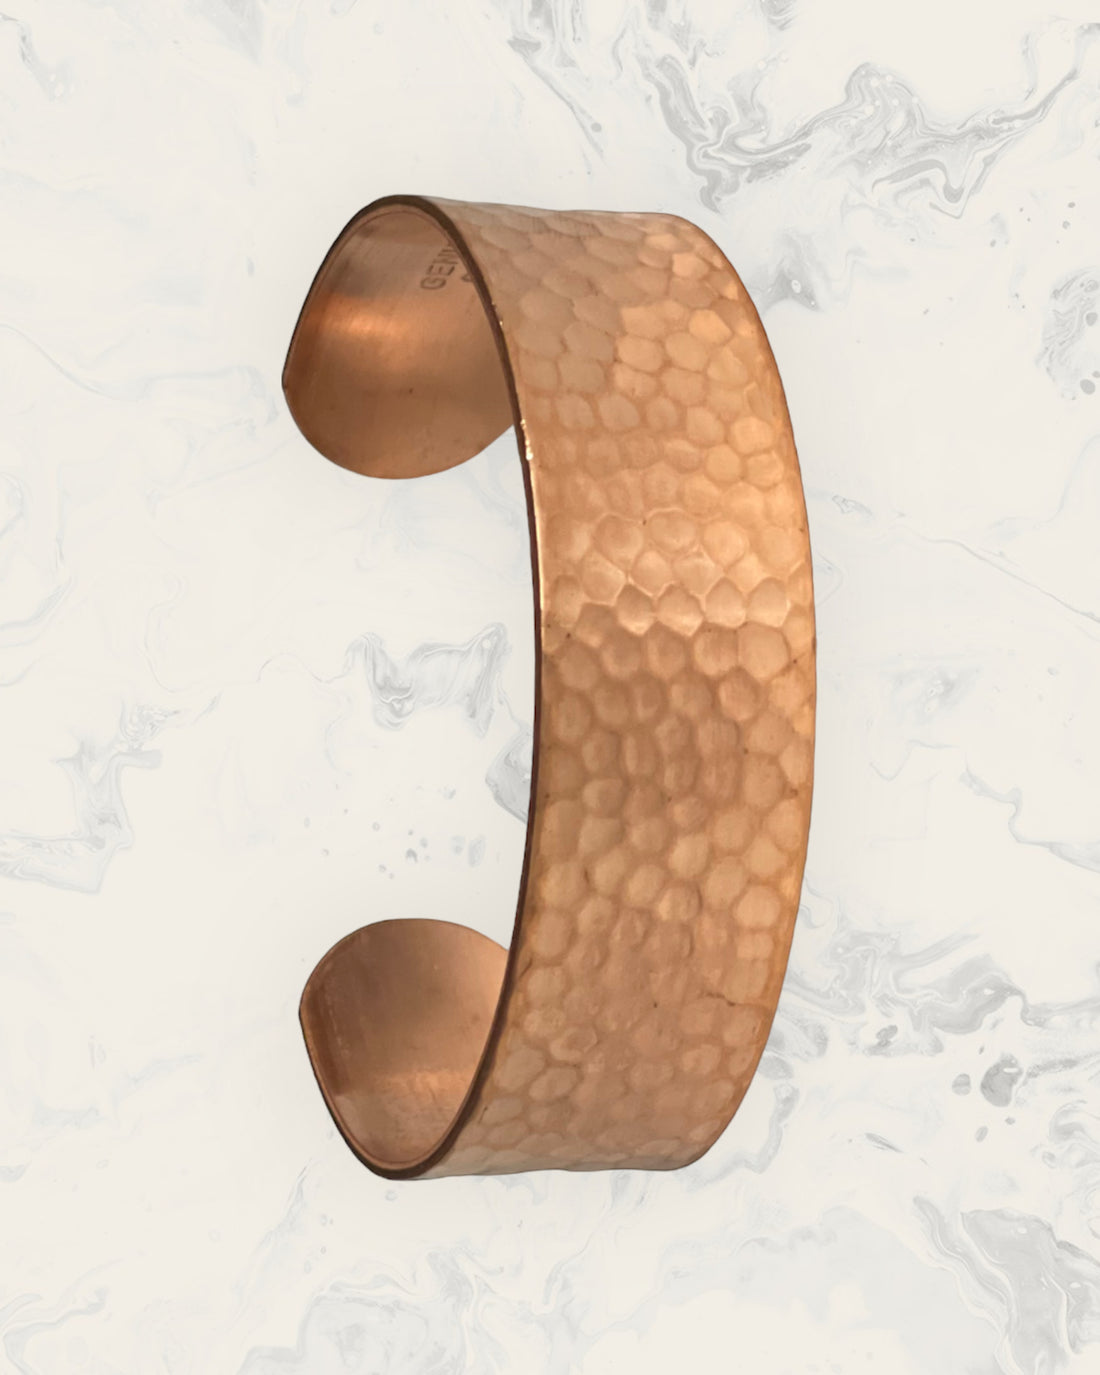 Copper Band - Regular Size